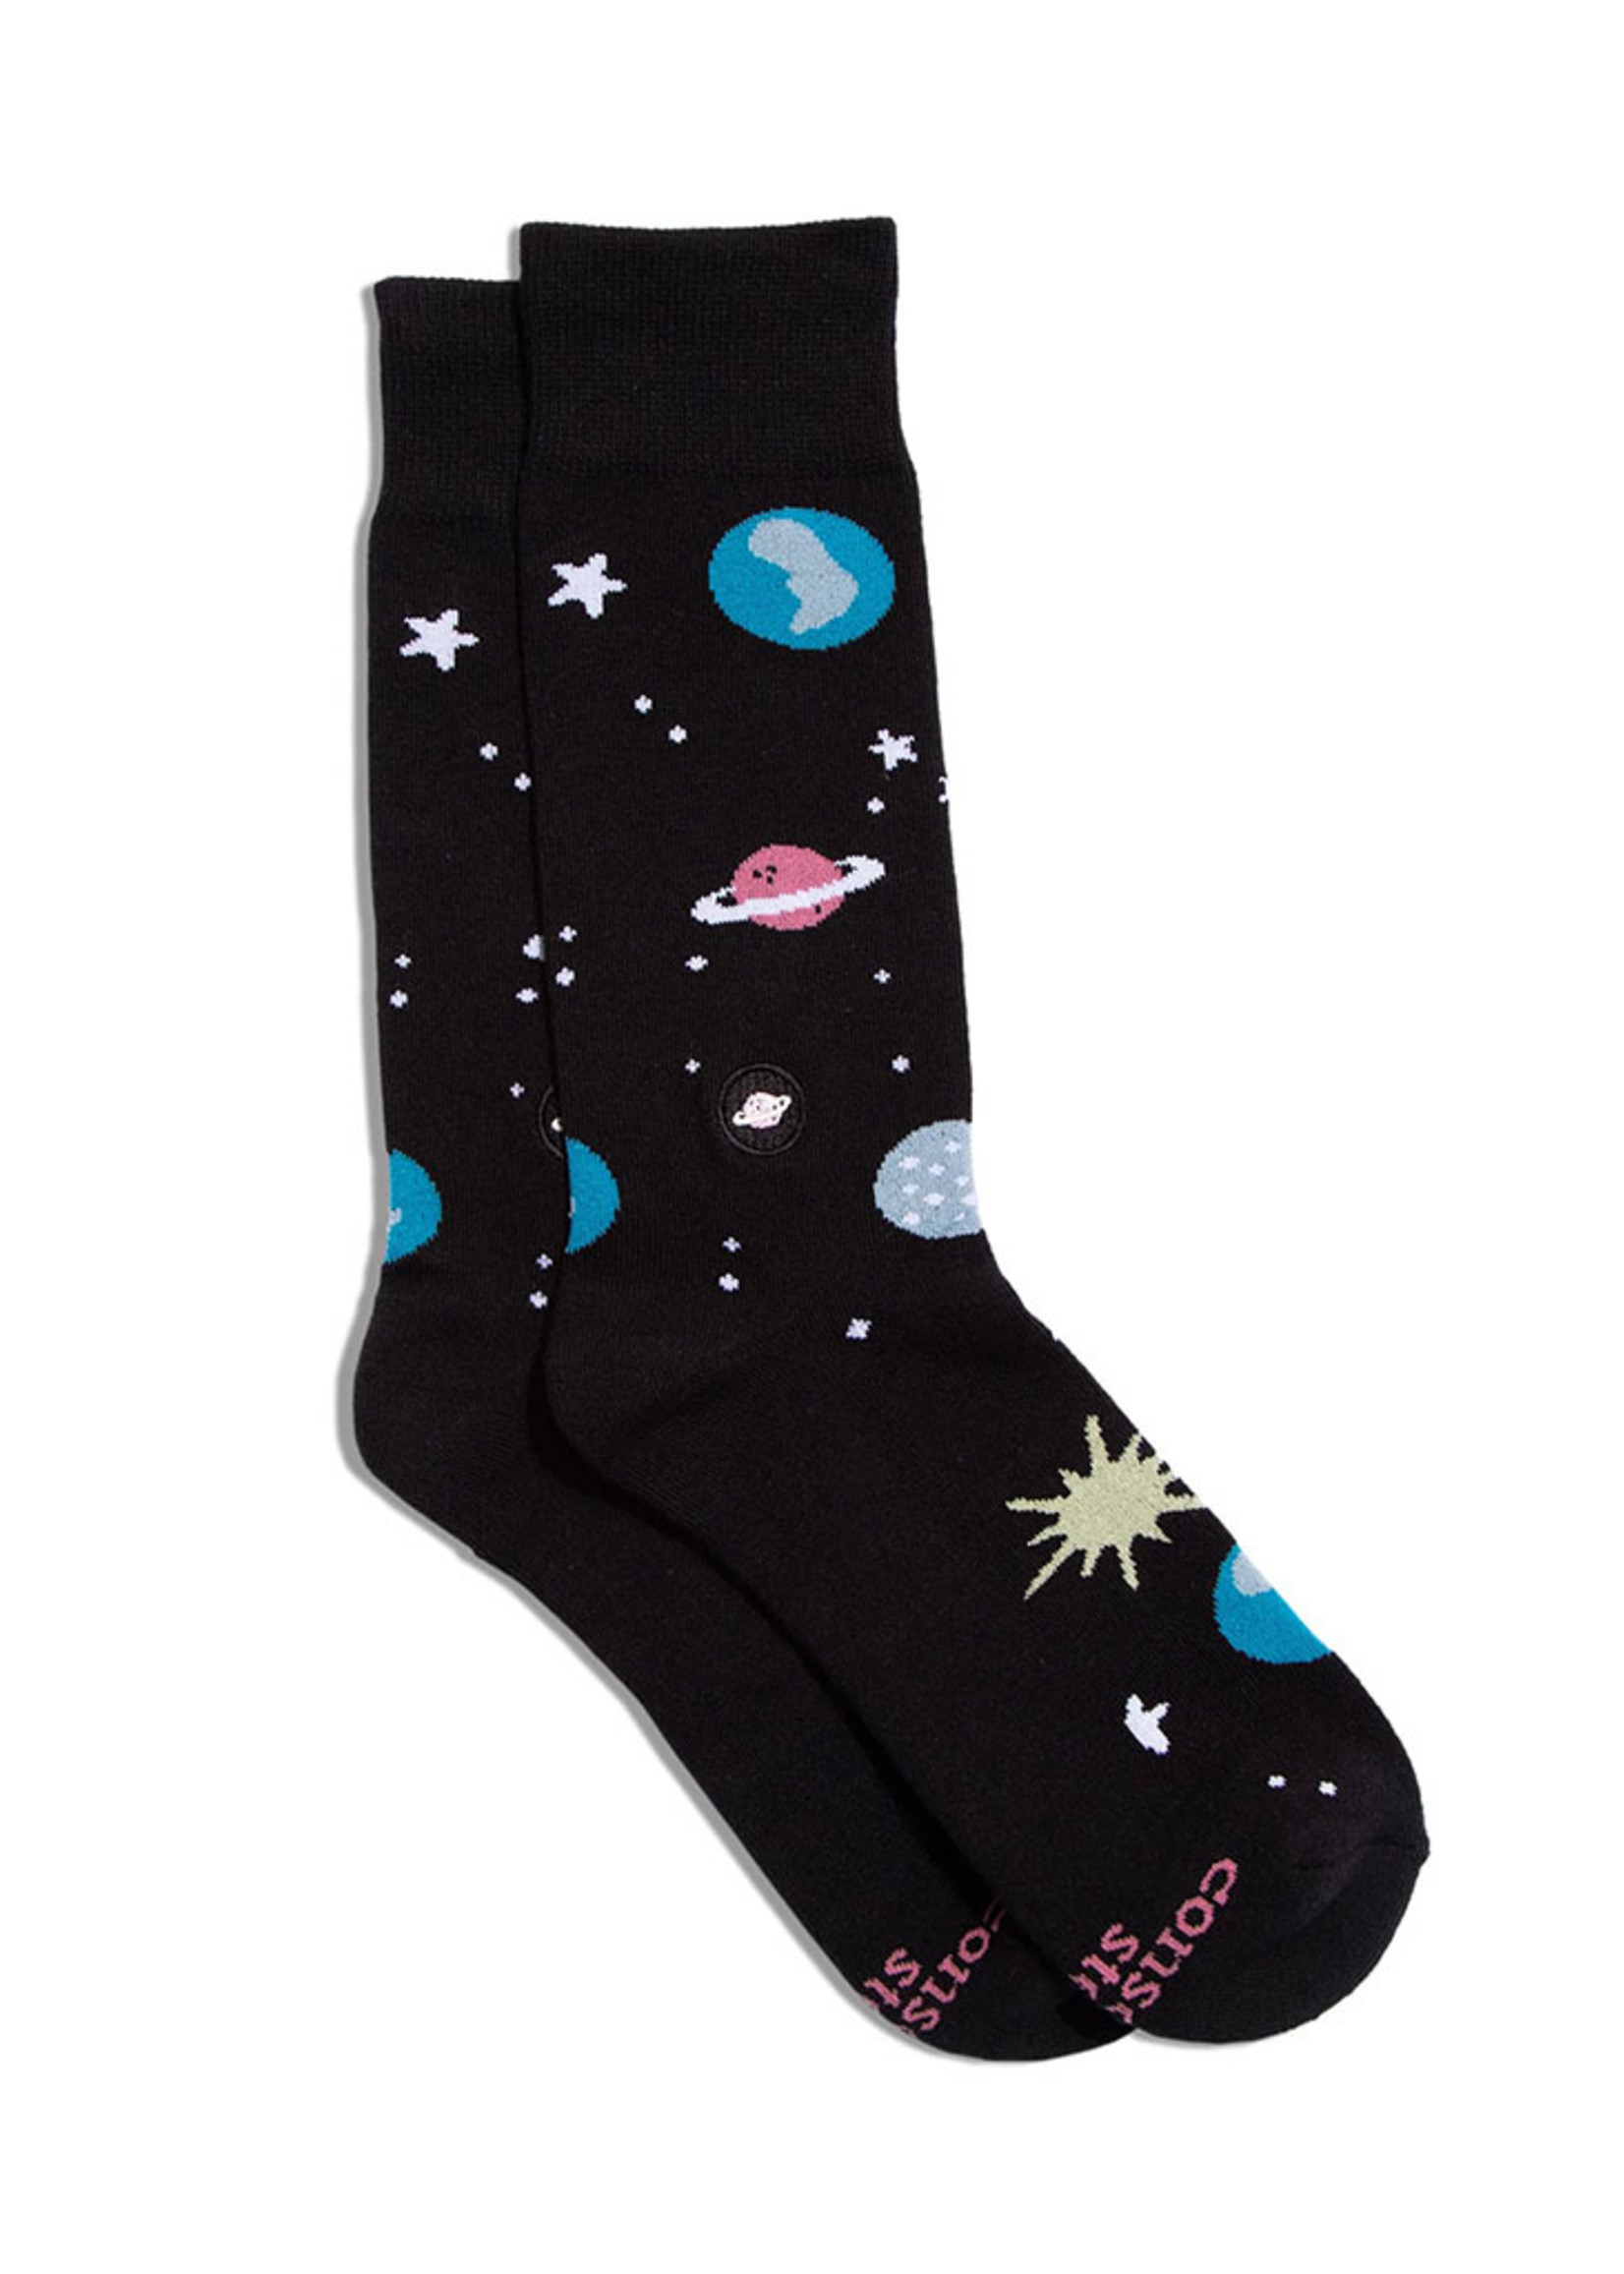 Conscious Step Men's Socks Support Space Explore